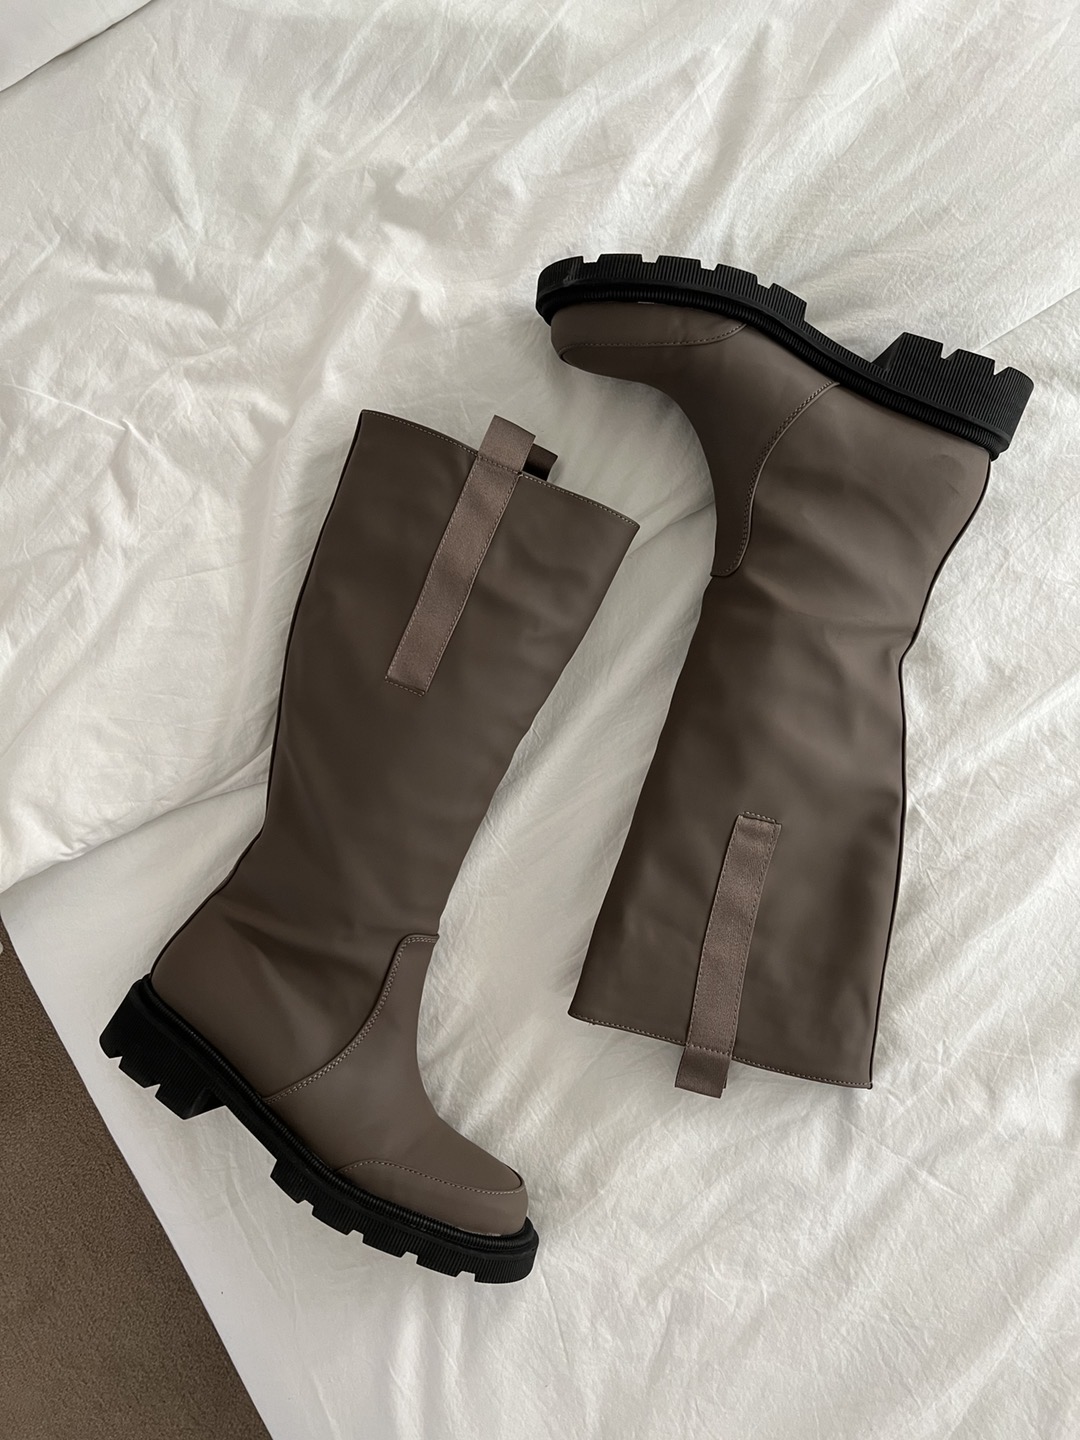 package rain boots 2 color